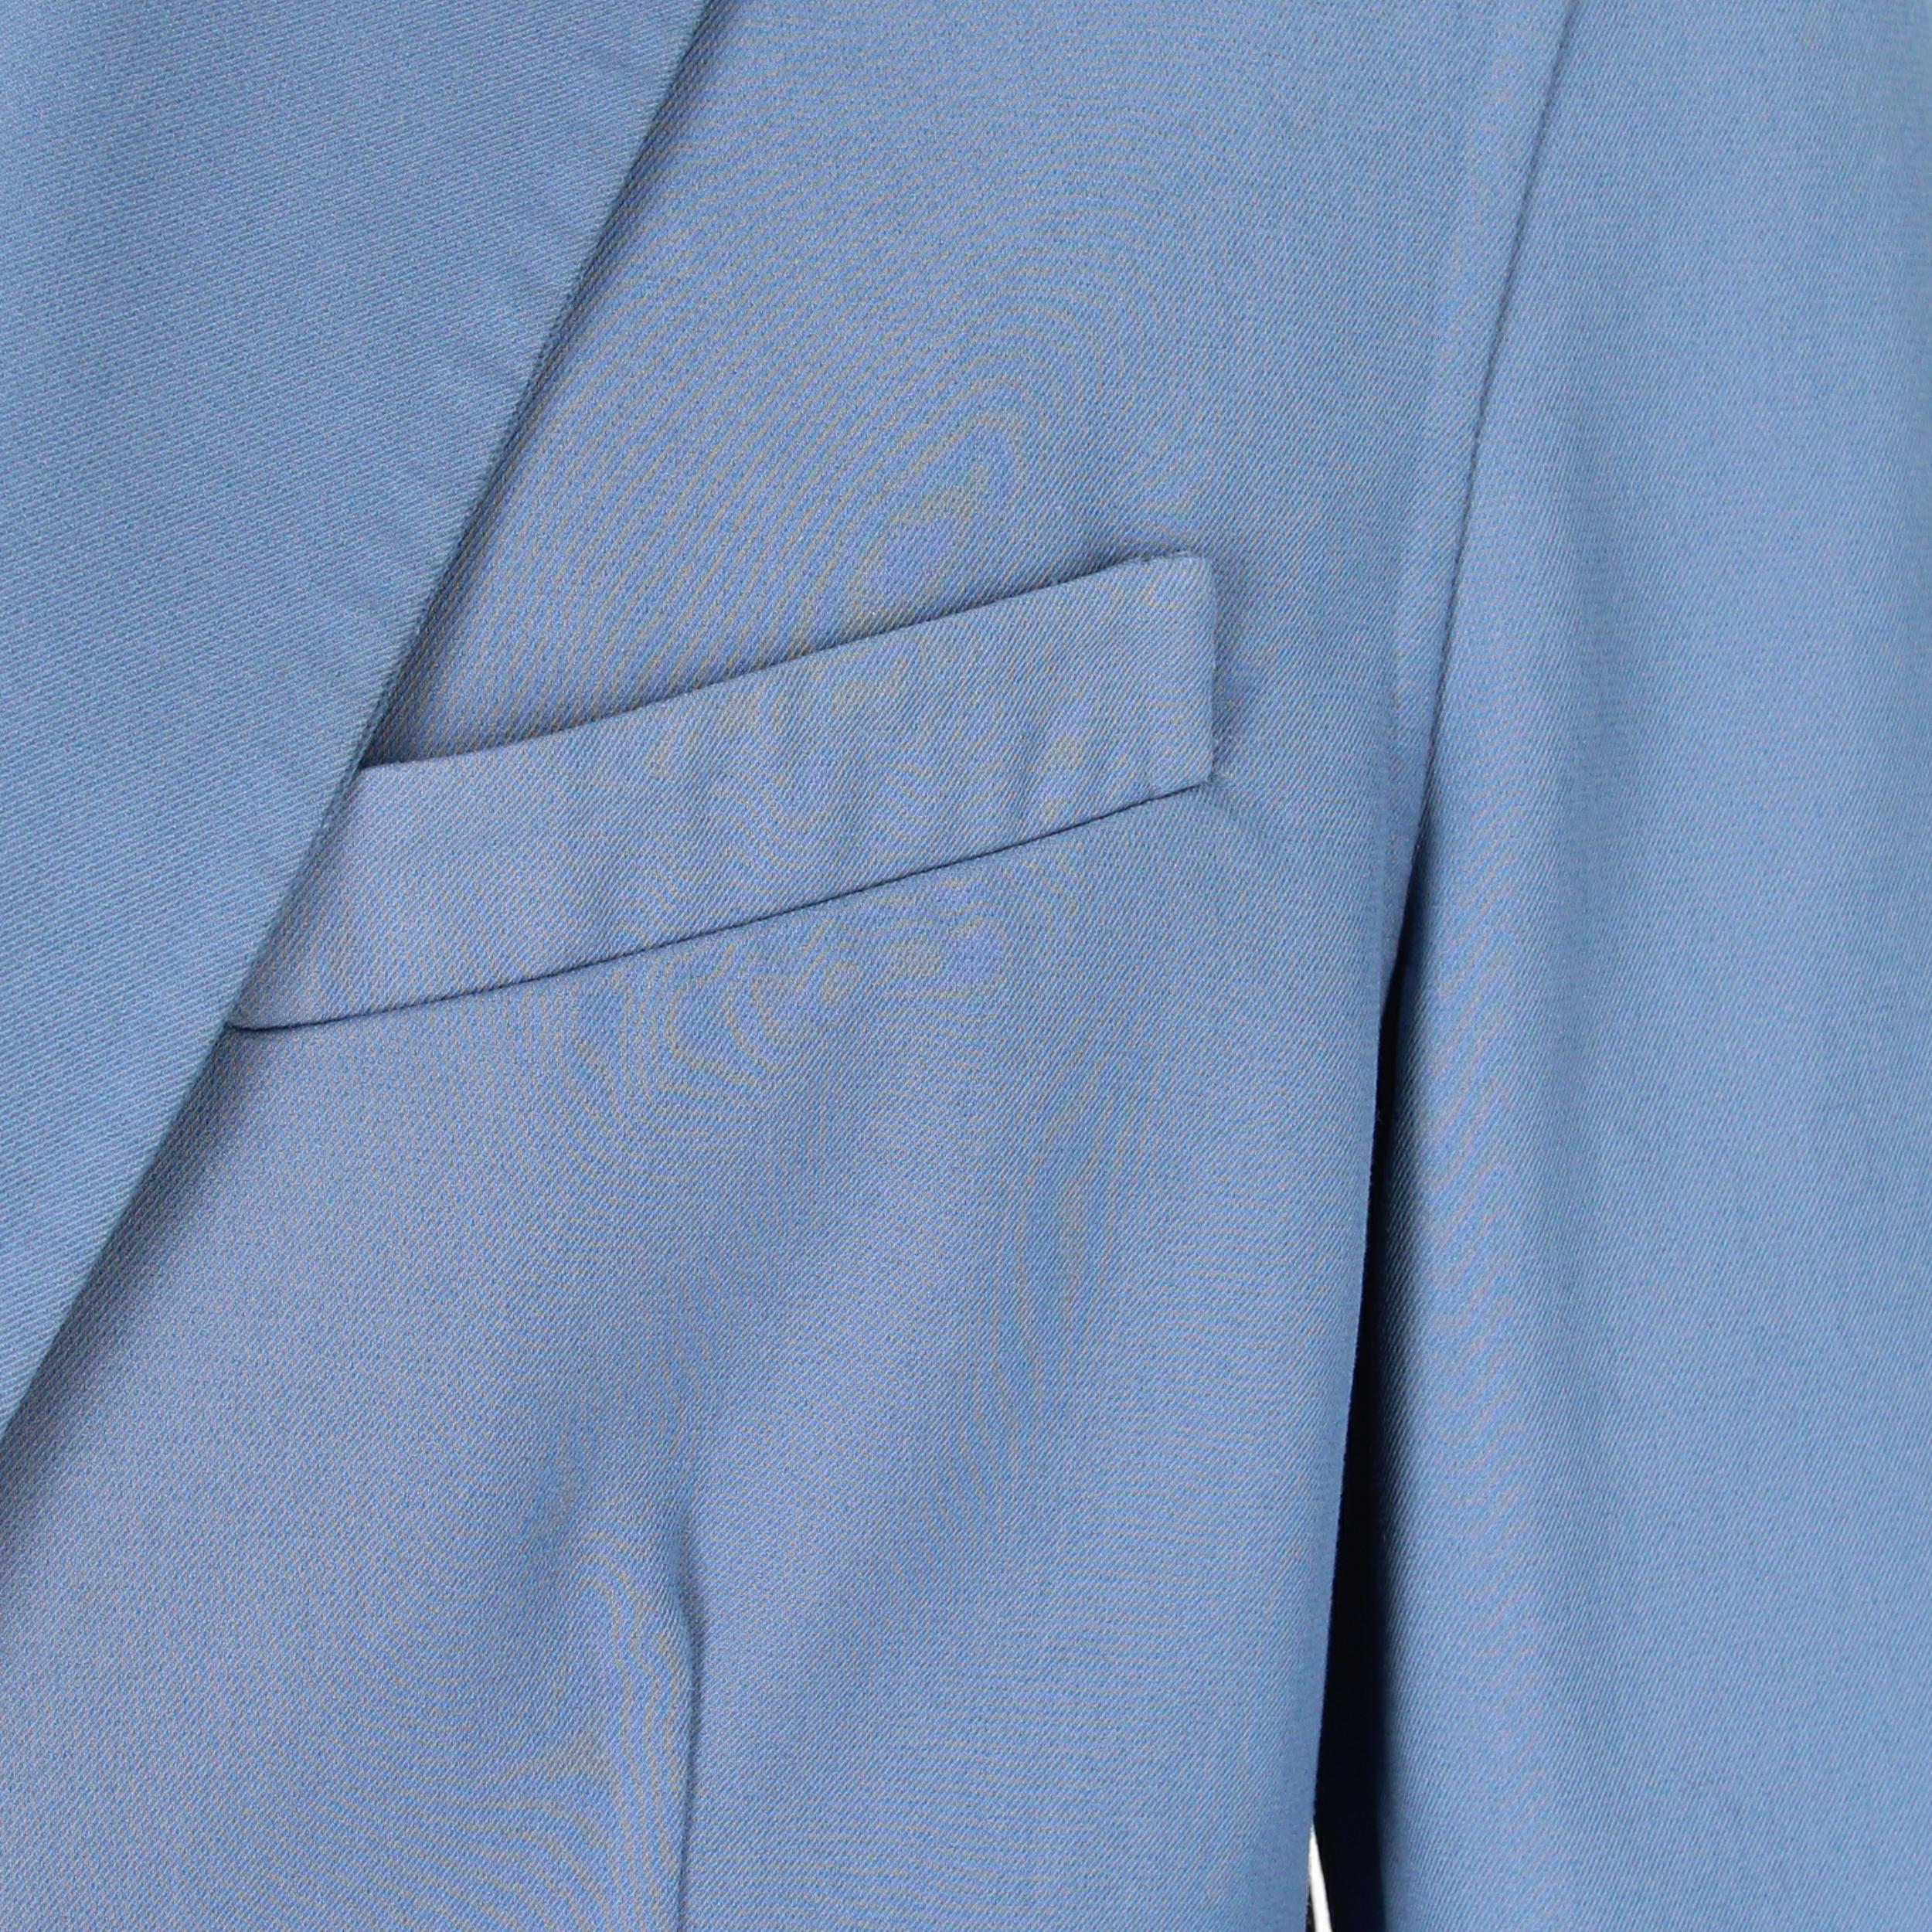 2010s Jil Sander Powder Blue Jacket 3